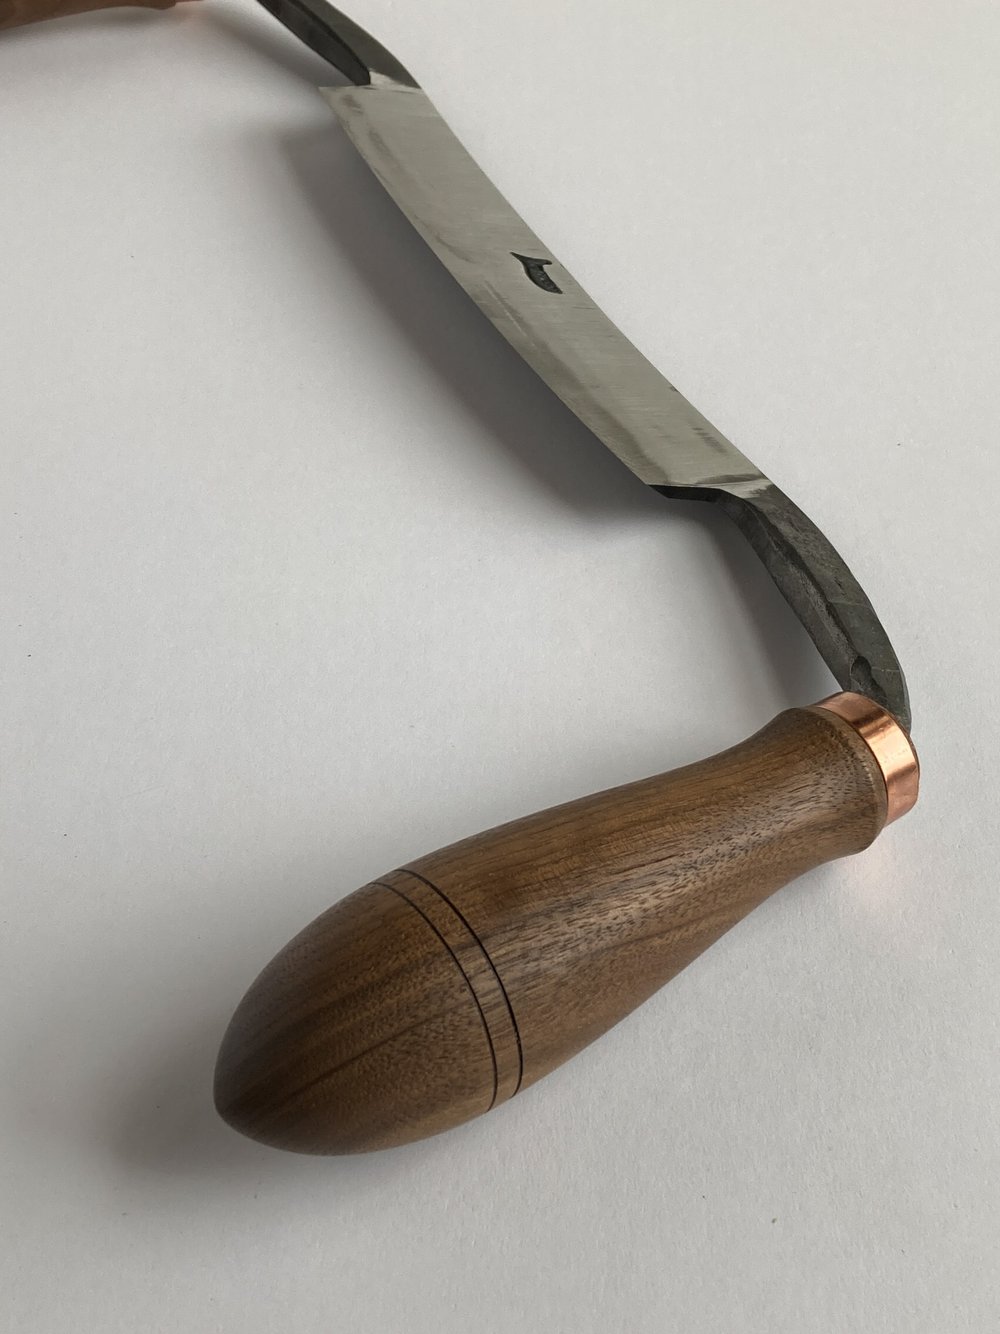 Drawknife (Bevel Down) — Jason A. Lonon, Toolmaker